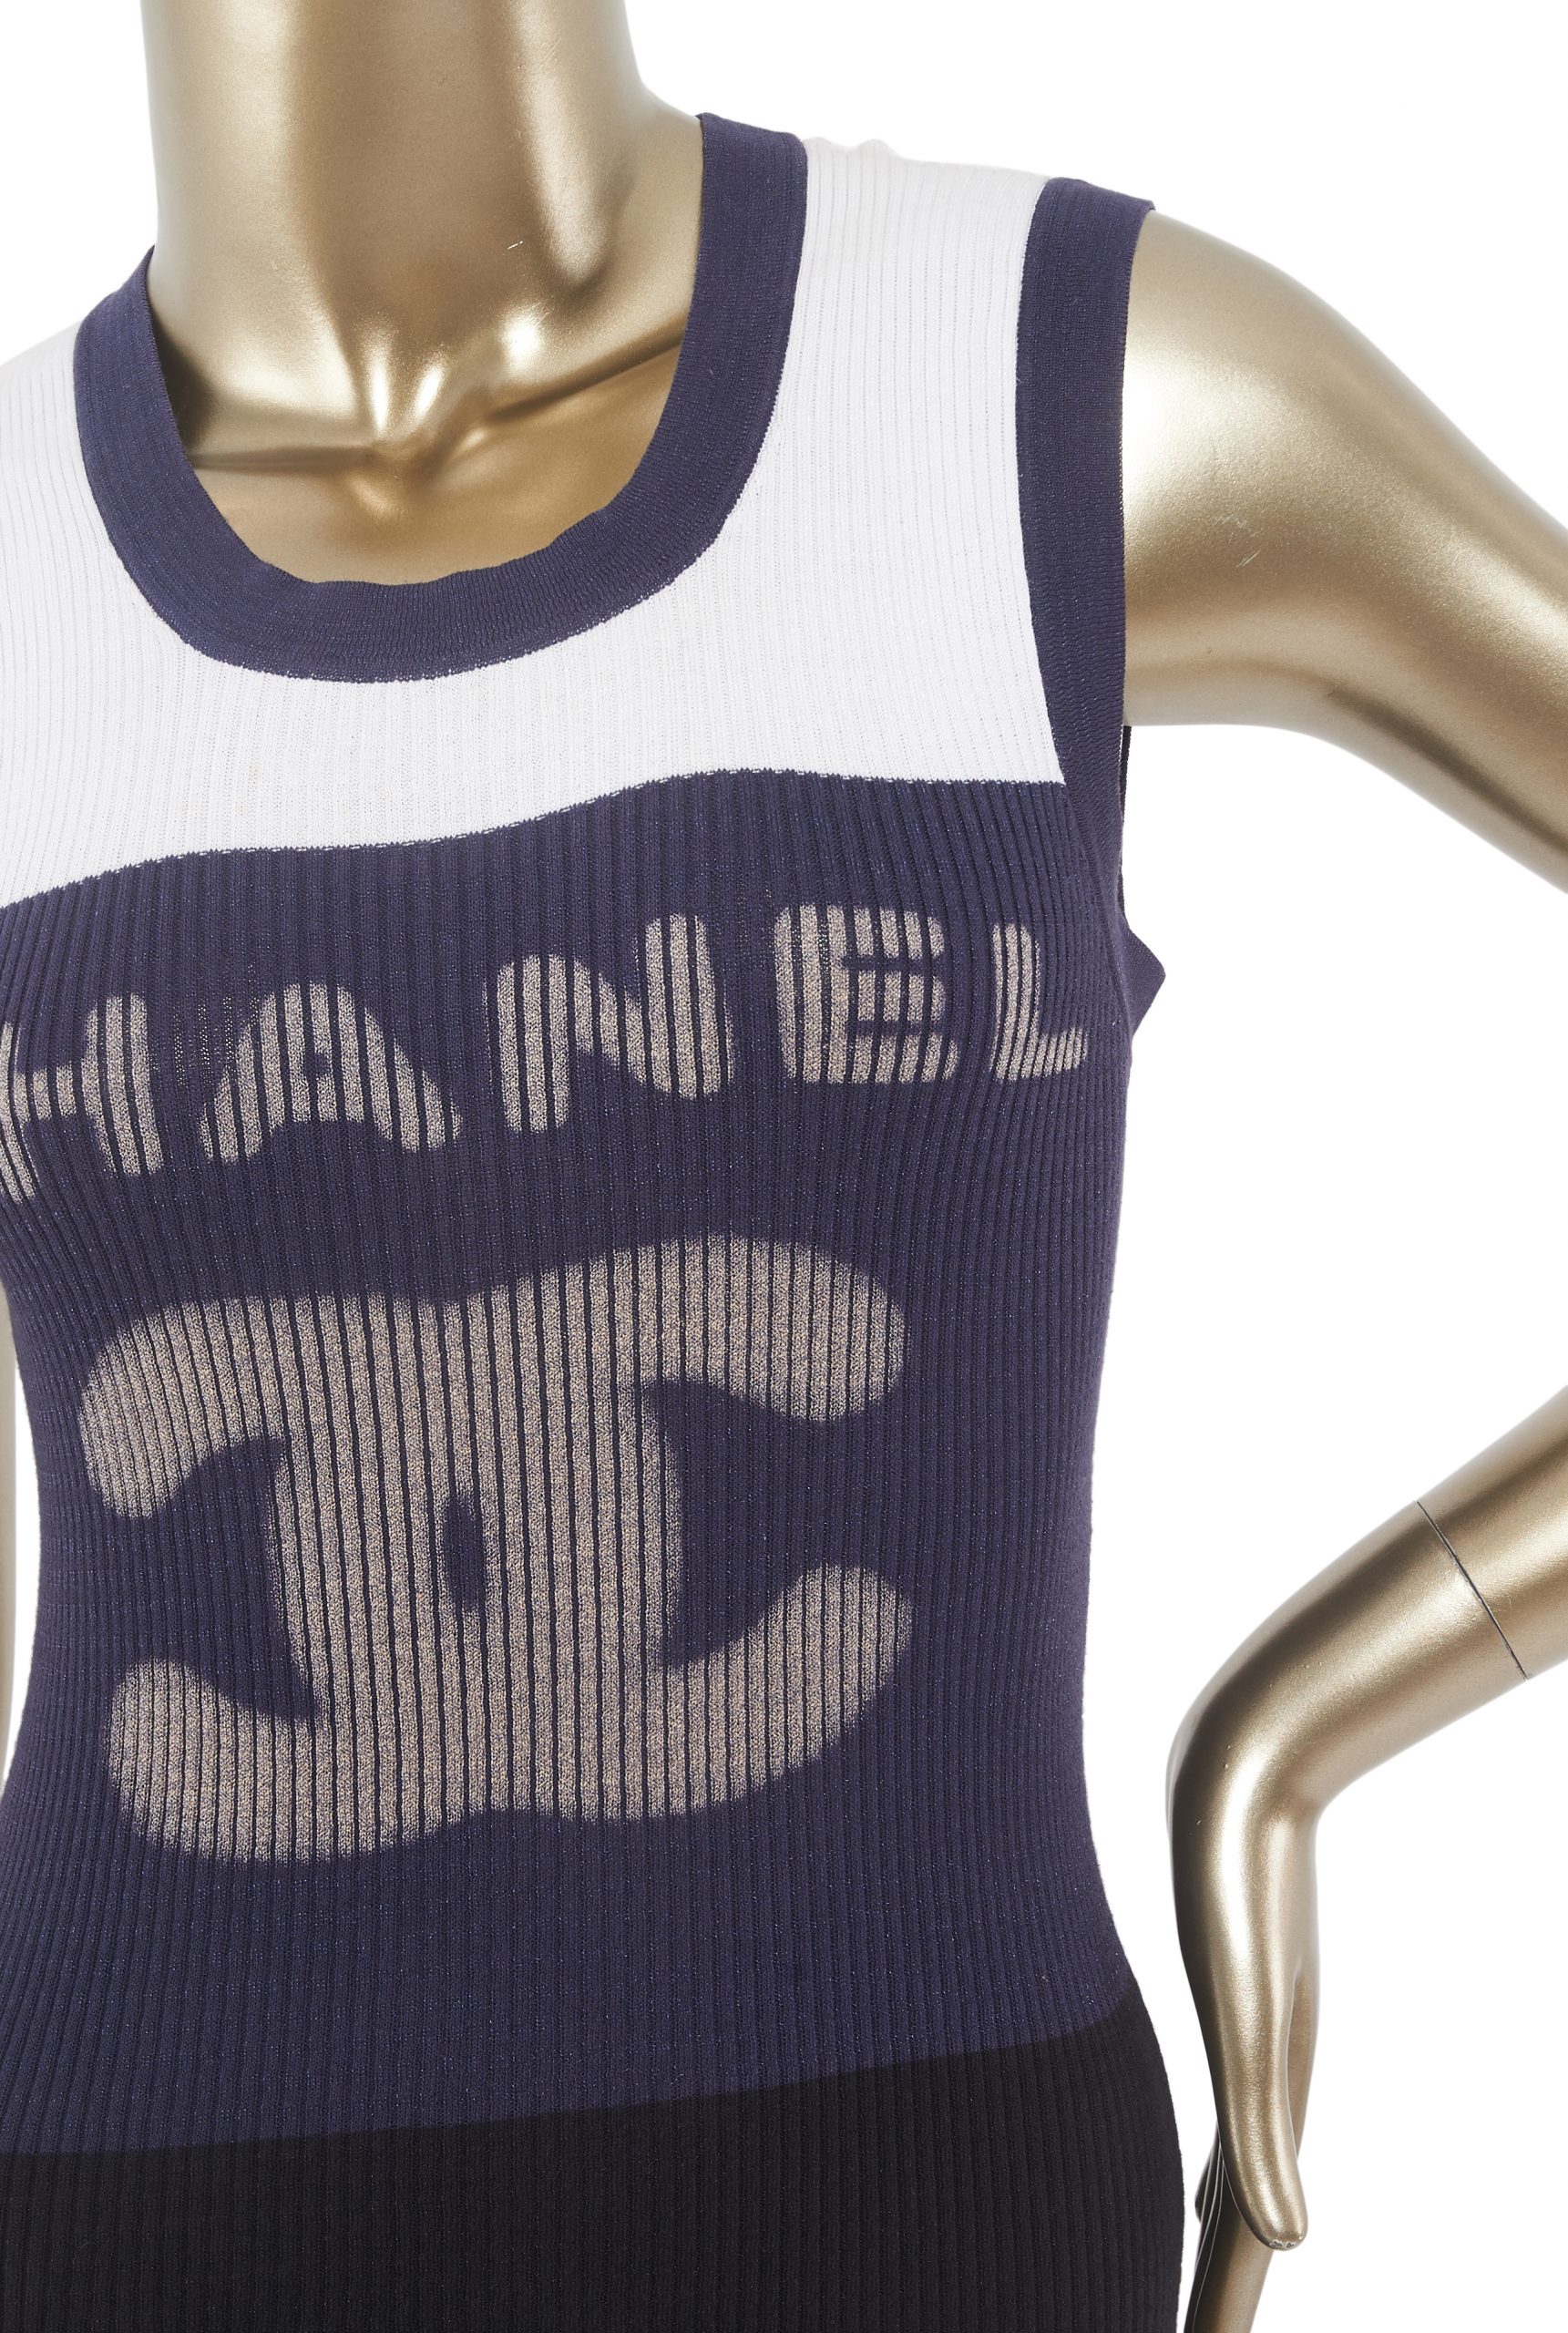 Vintage Chanel Knit Mini Dress - Janet Mandell